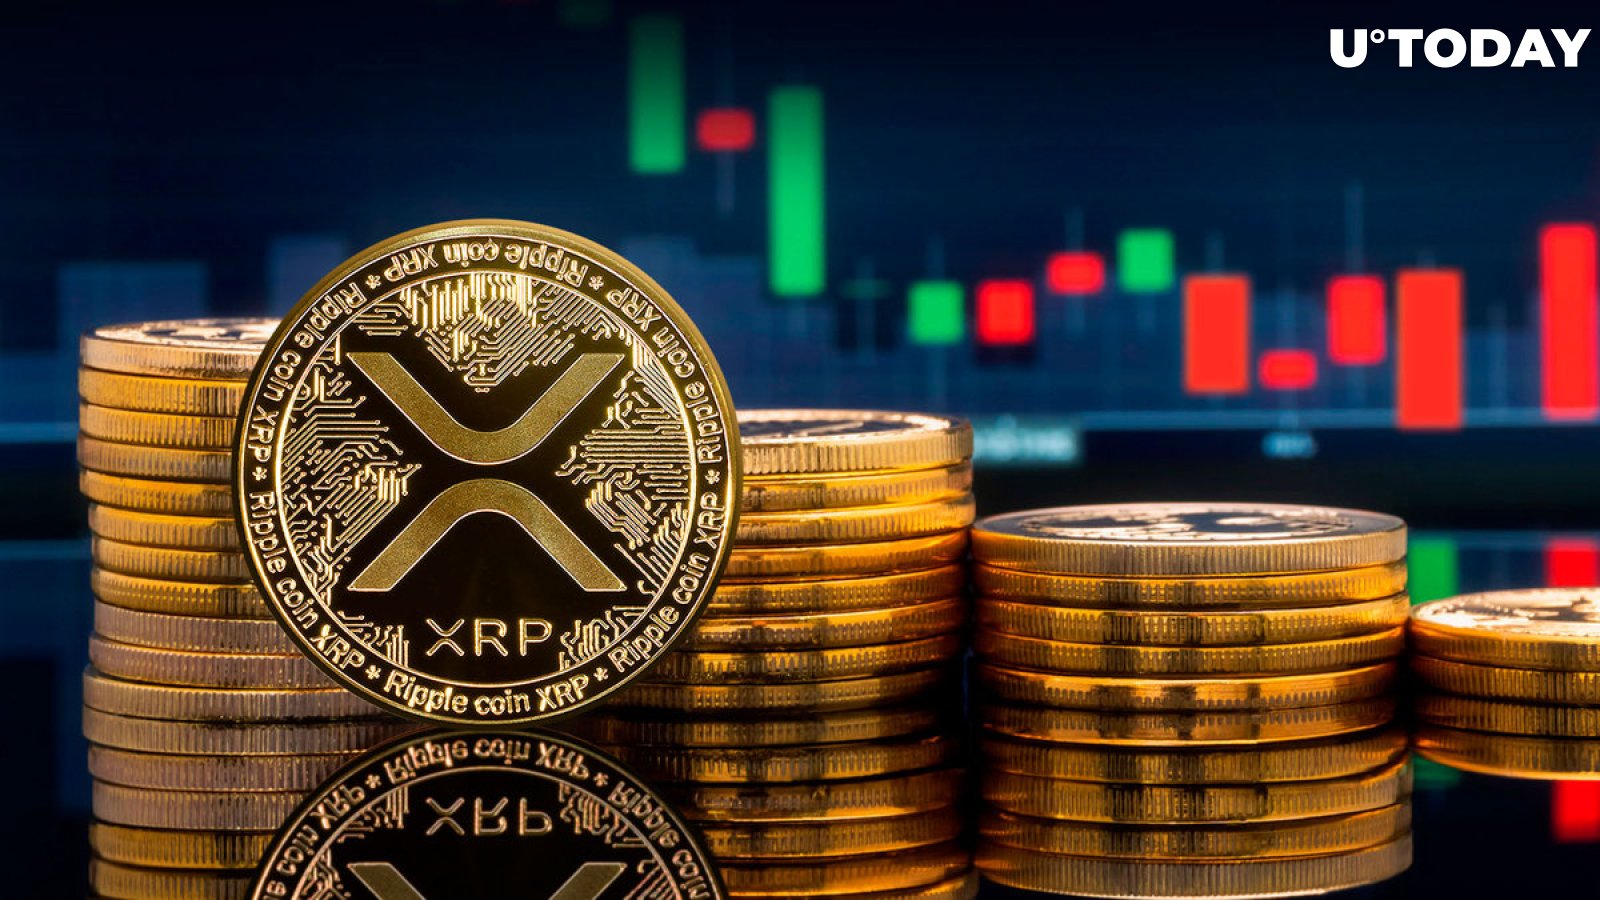 XRP to Drop Below $0.5? Price’s Unexpected Move